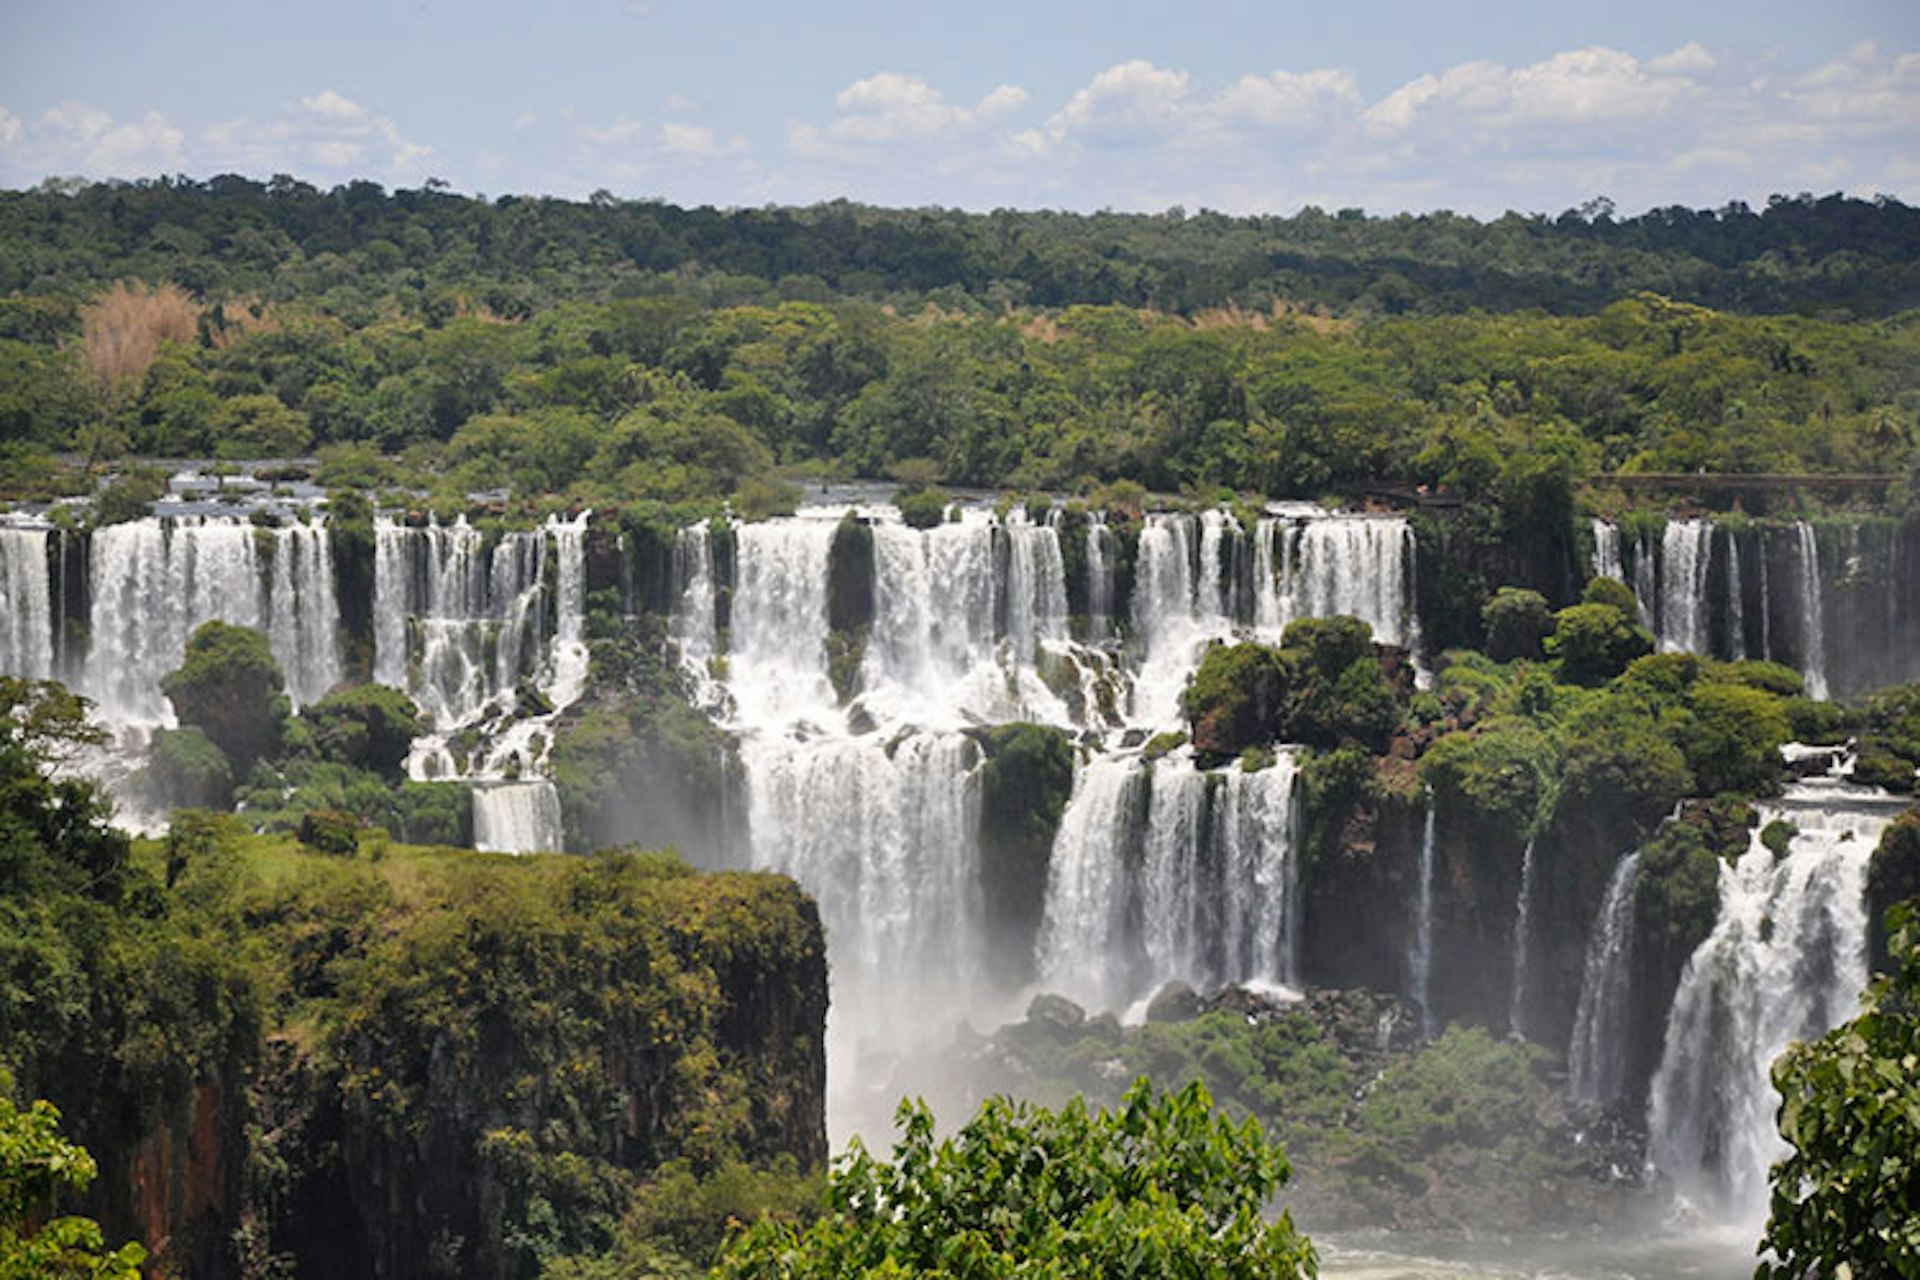 Iguacu Falls by Mike Vondran. CC BY 2.0.